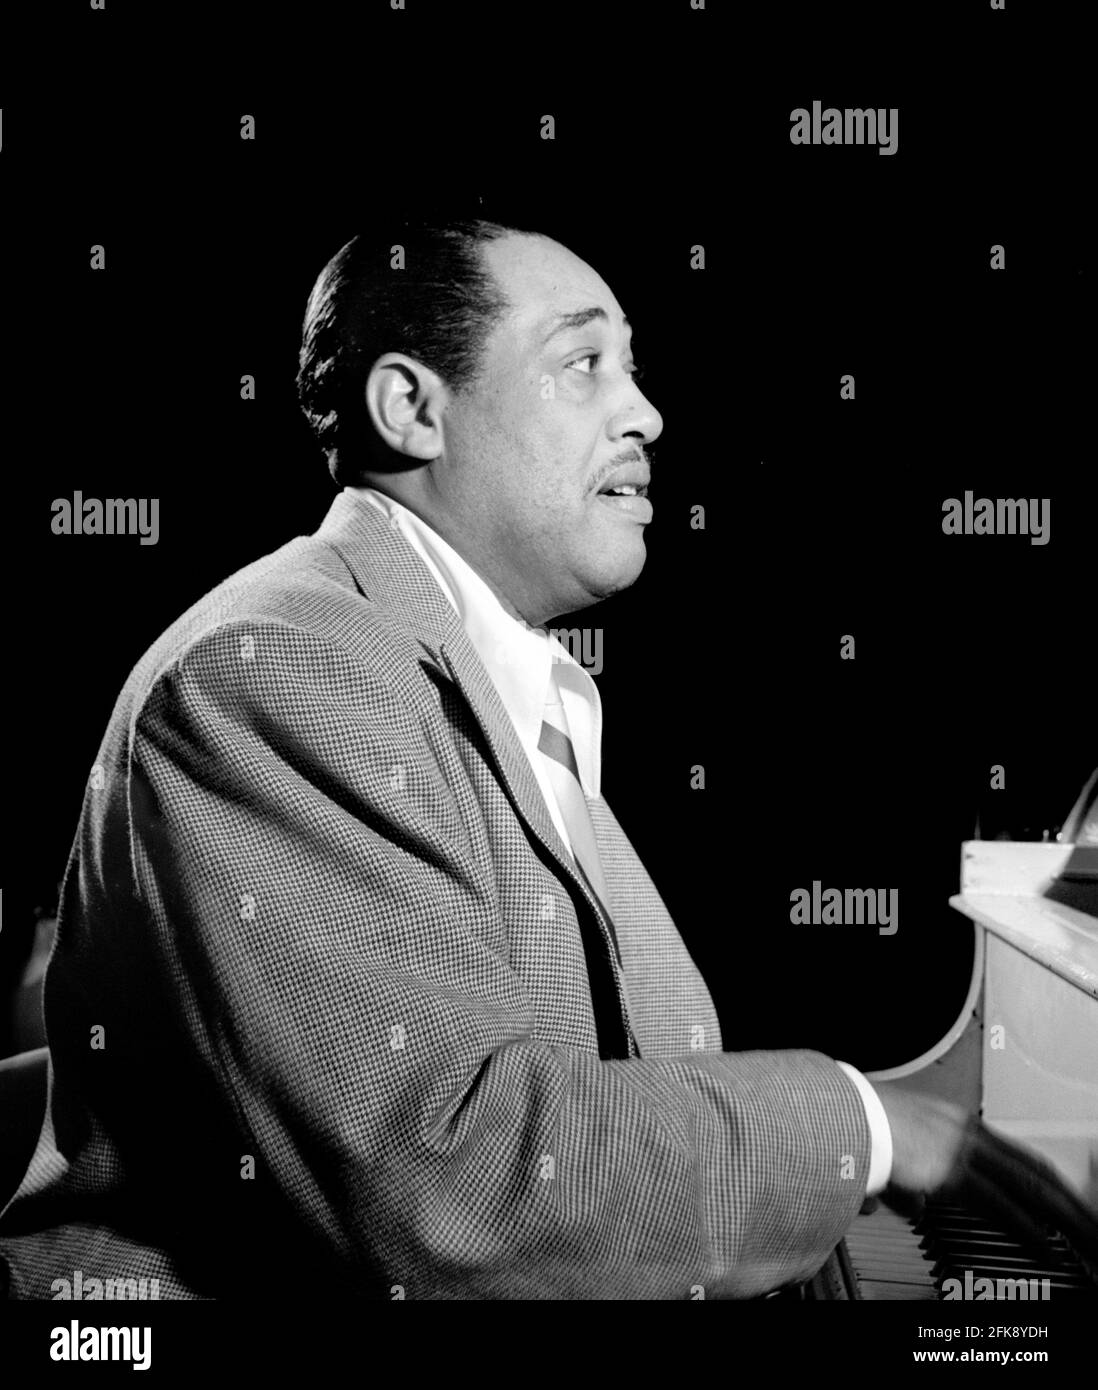 Duke Ellington. Portrait of the American Jazz pianist, Edward Kennedy 'Duke' Ellington (1899-1974) by William P Gottlieb, 1946 Stock Photo